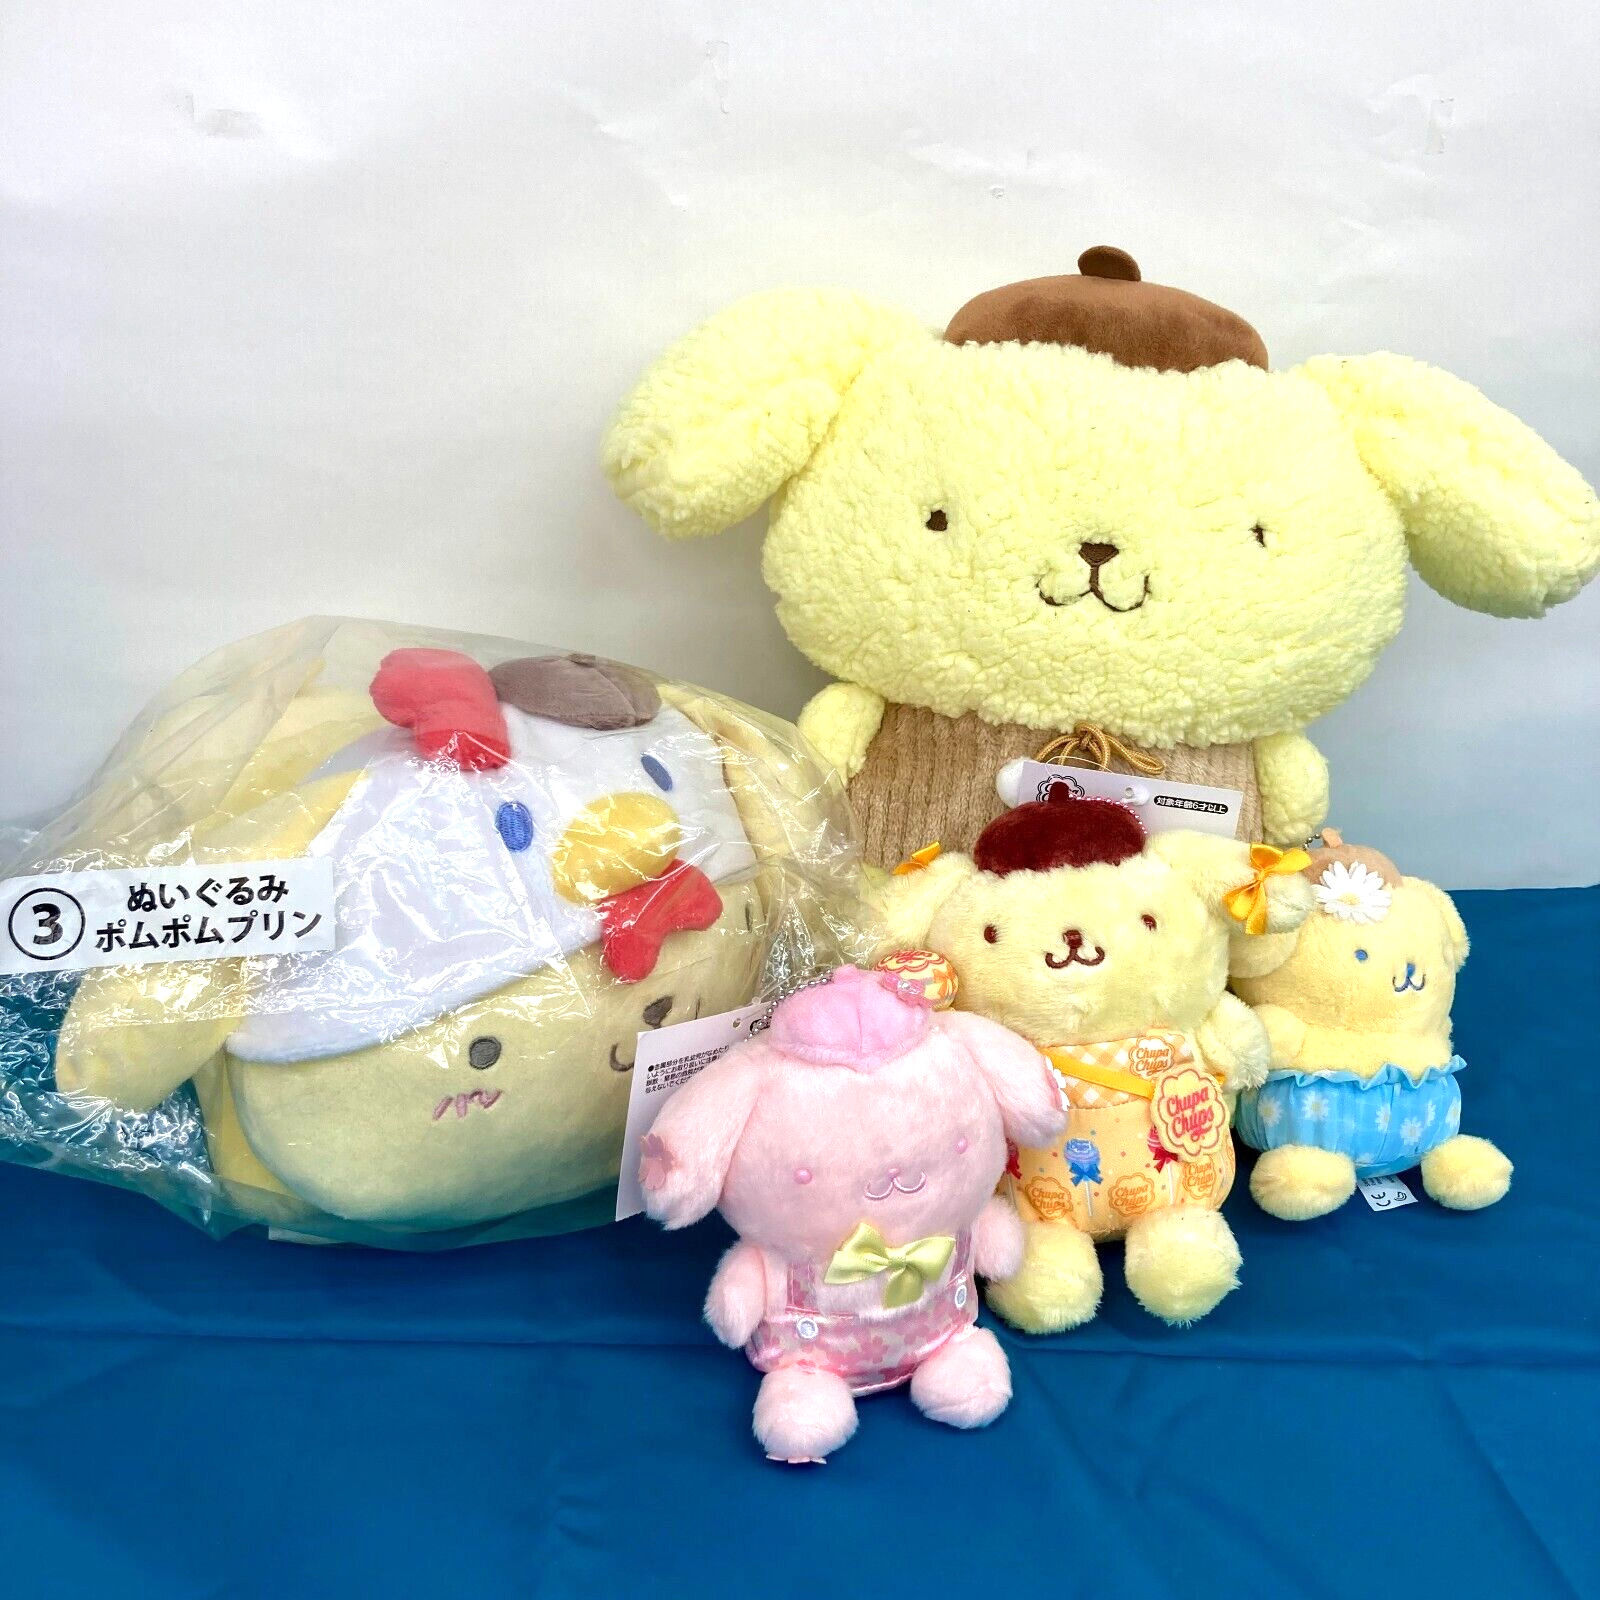 Japan Sanrio Pom Pom Purin 3 Mascot Holders 1 Blanket 1 Limited Plush All New